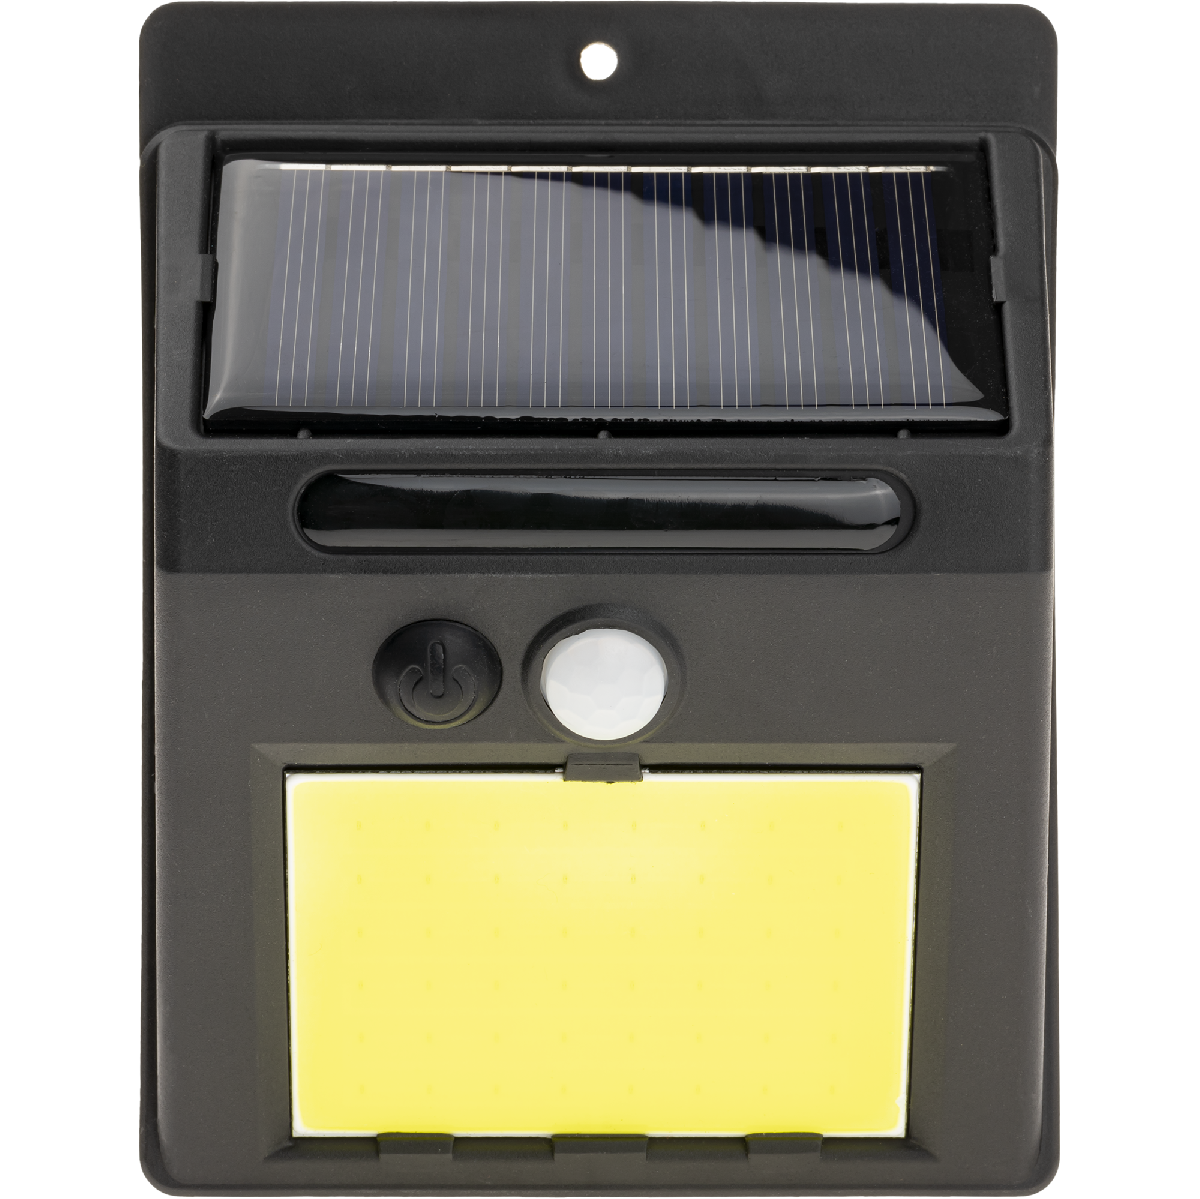 Прожектор на солнечных батареях Duwi Solar led 25013 5